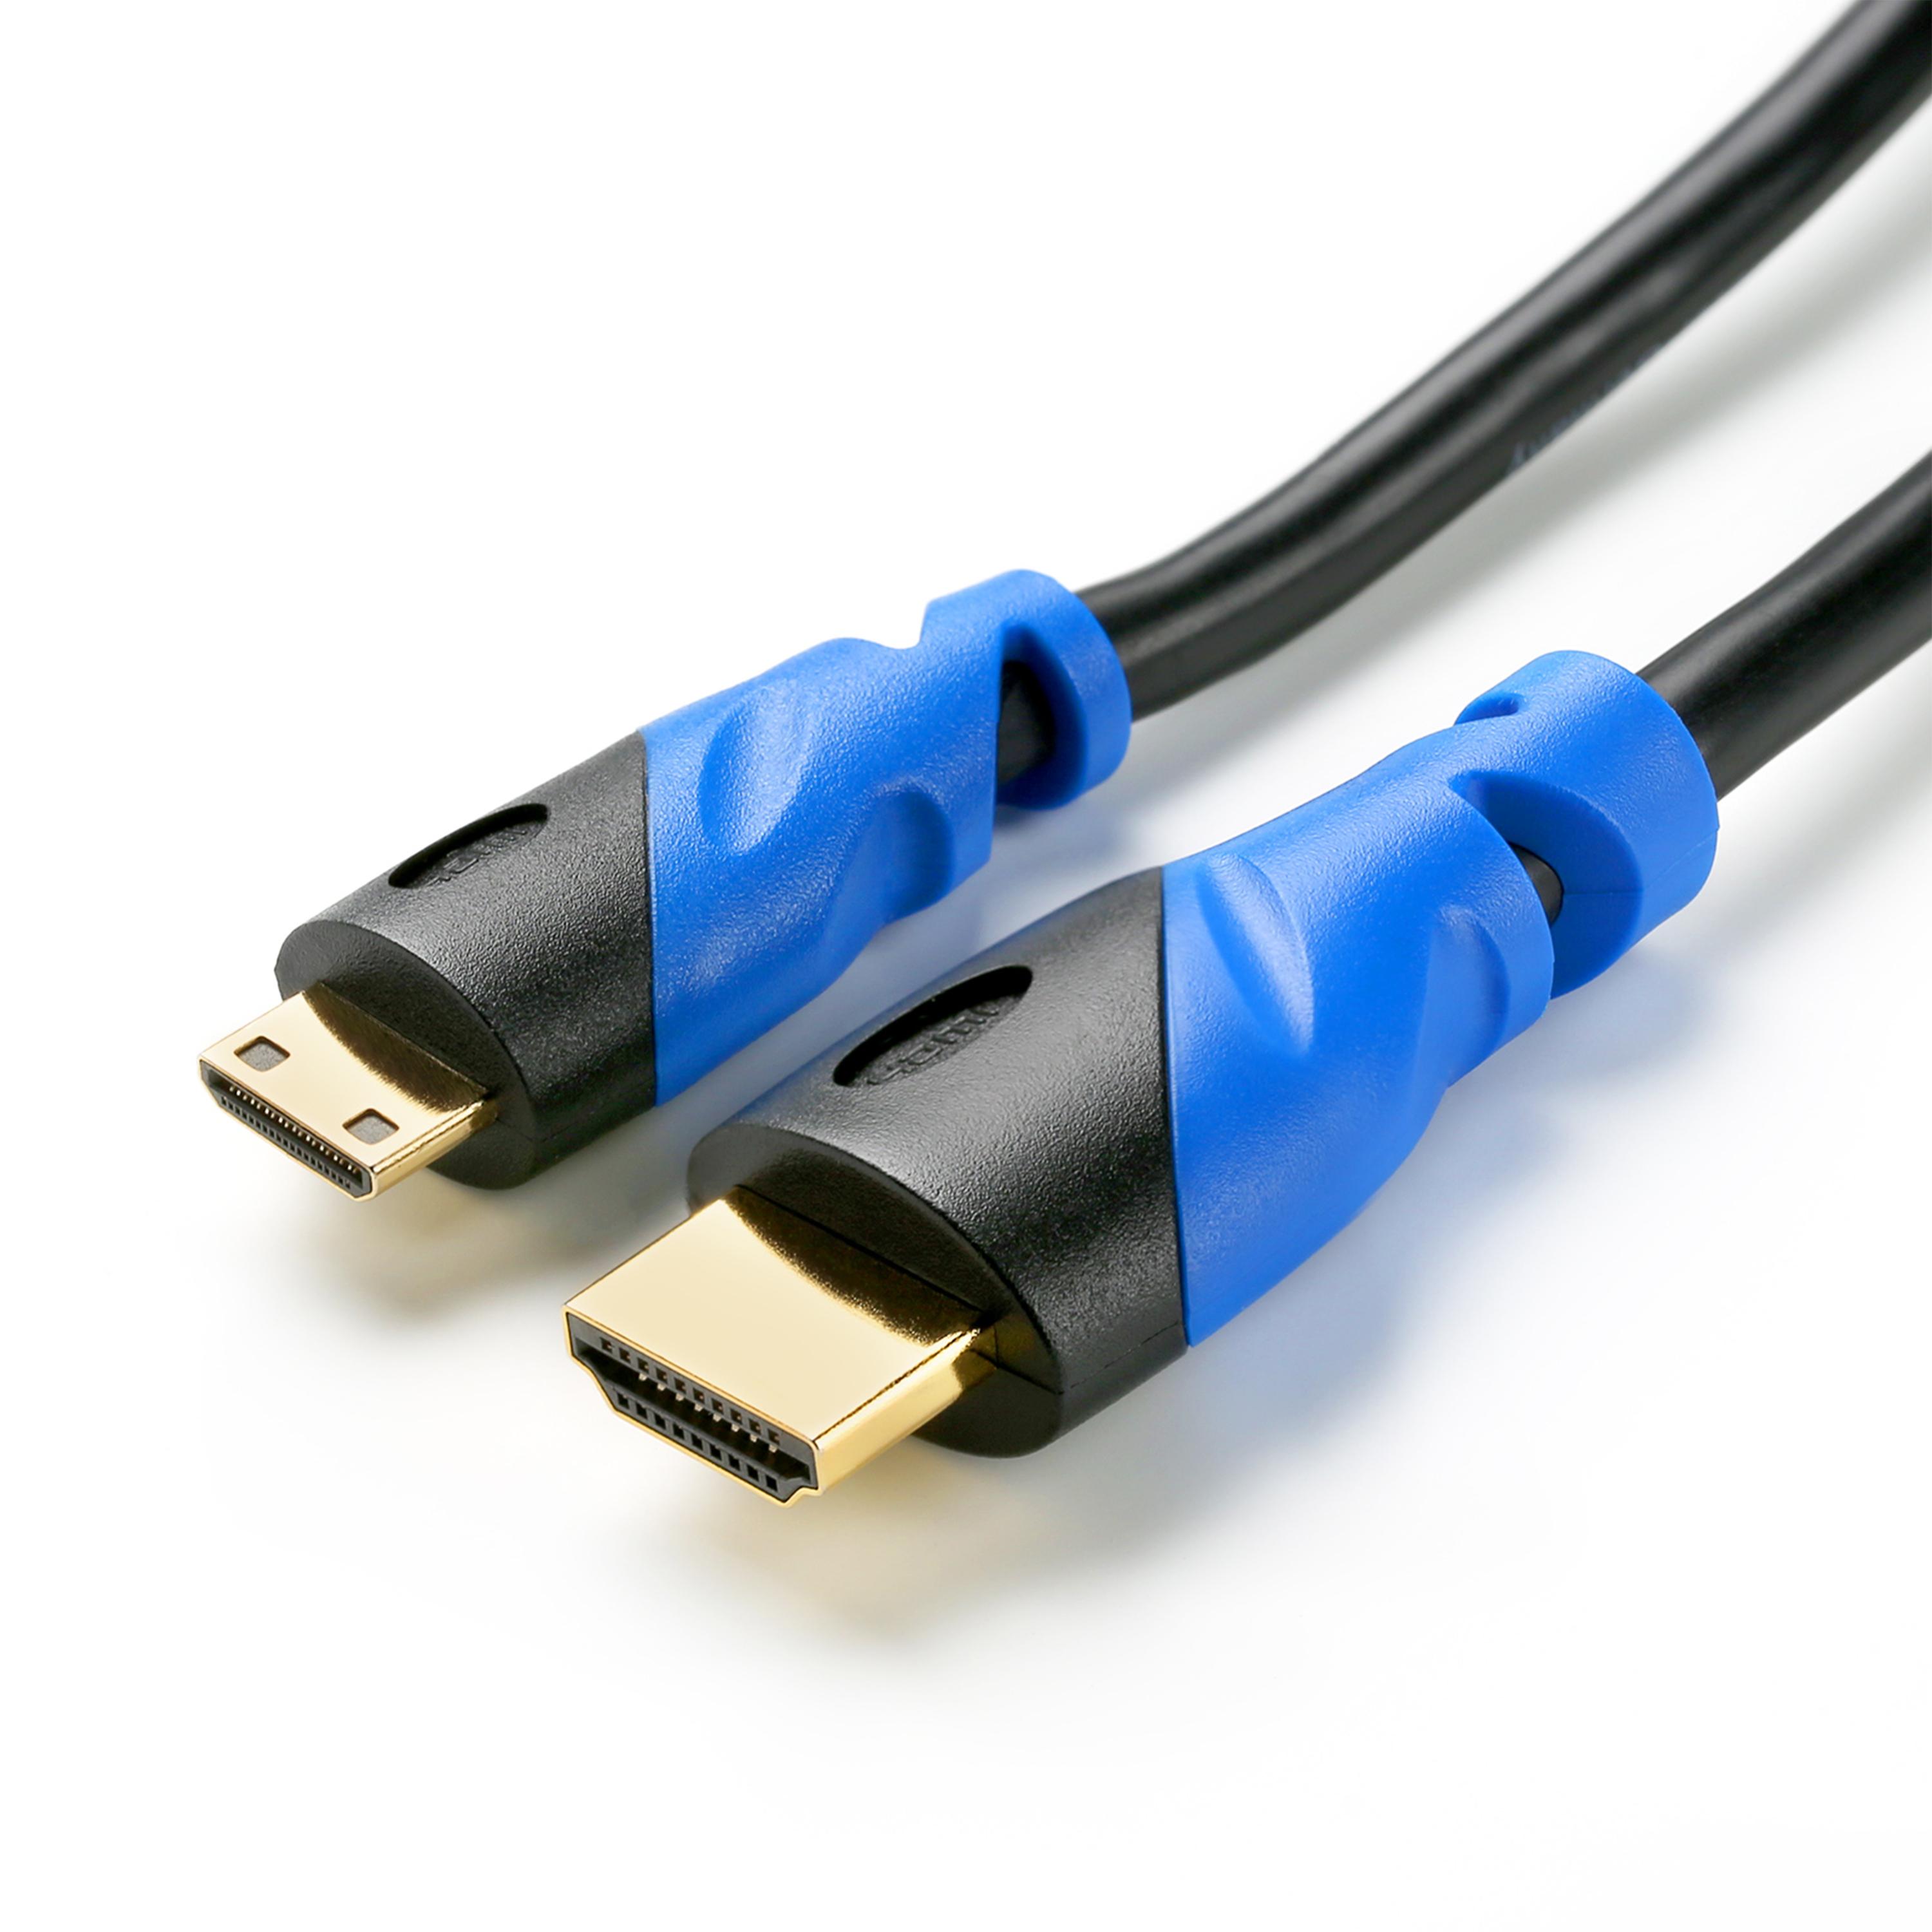 CSL MiniHDMI 2.0 Kabel, Kabel, HDMI 3m schwarz/blau